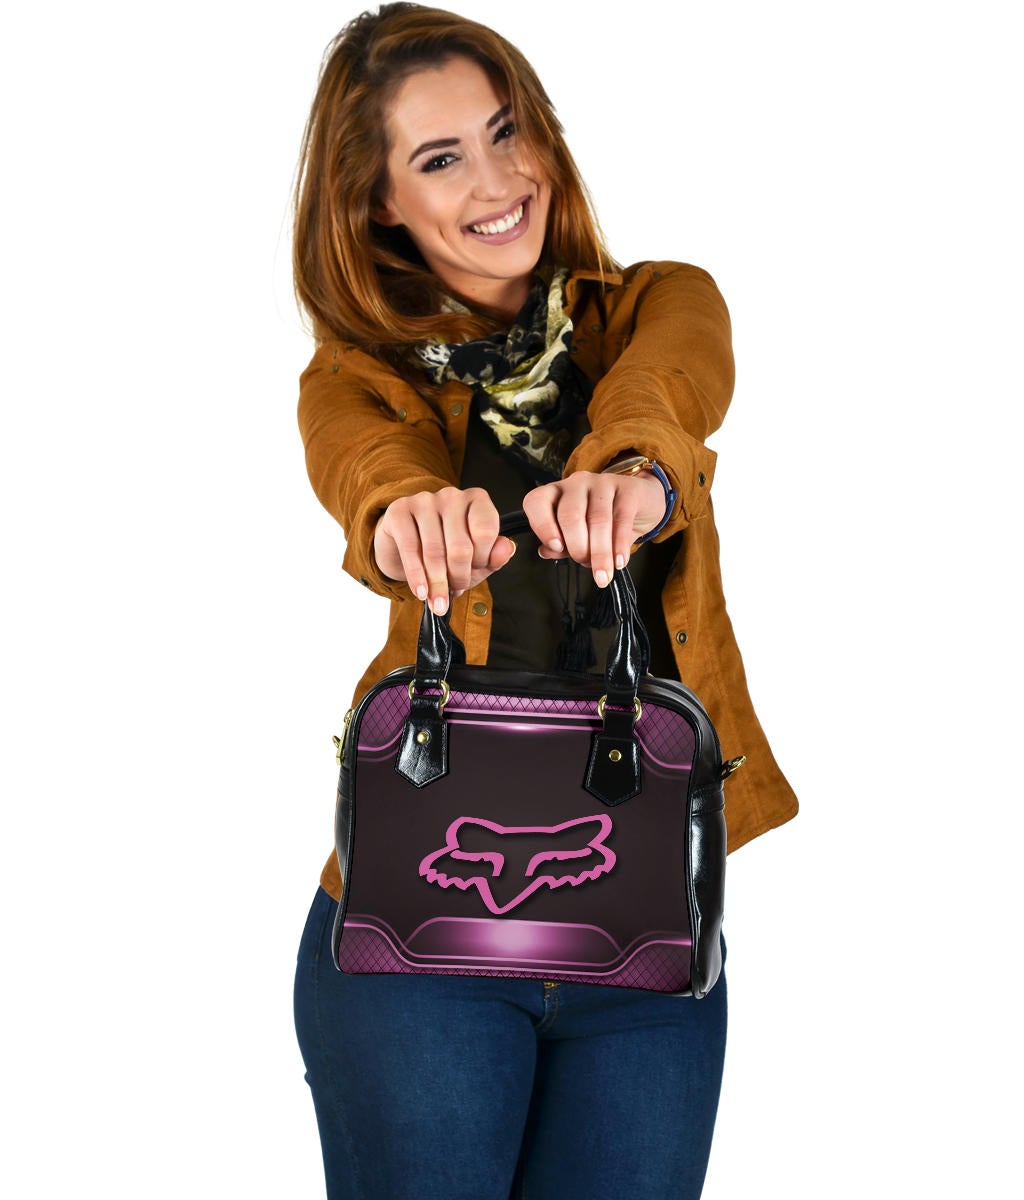 Fox Racing - Fox Girls Wallet - Runaway Wristlet - Black - One Size $36.50 # Fox #Handbags | Fox racing, Purses, Gray wallet